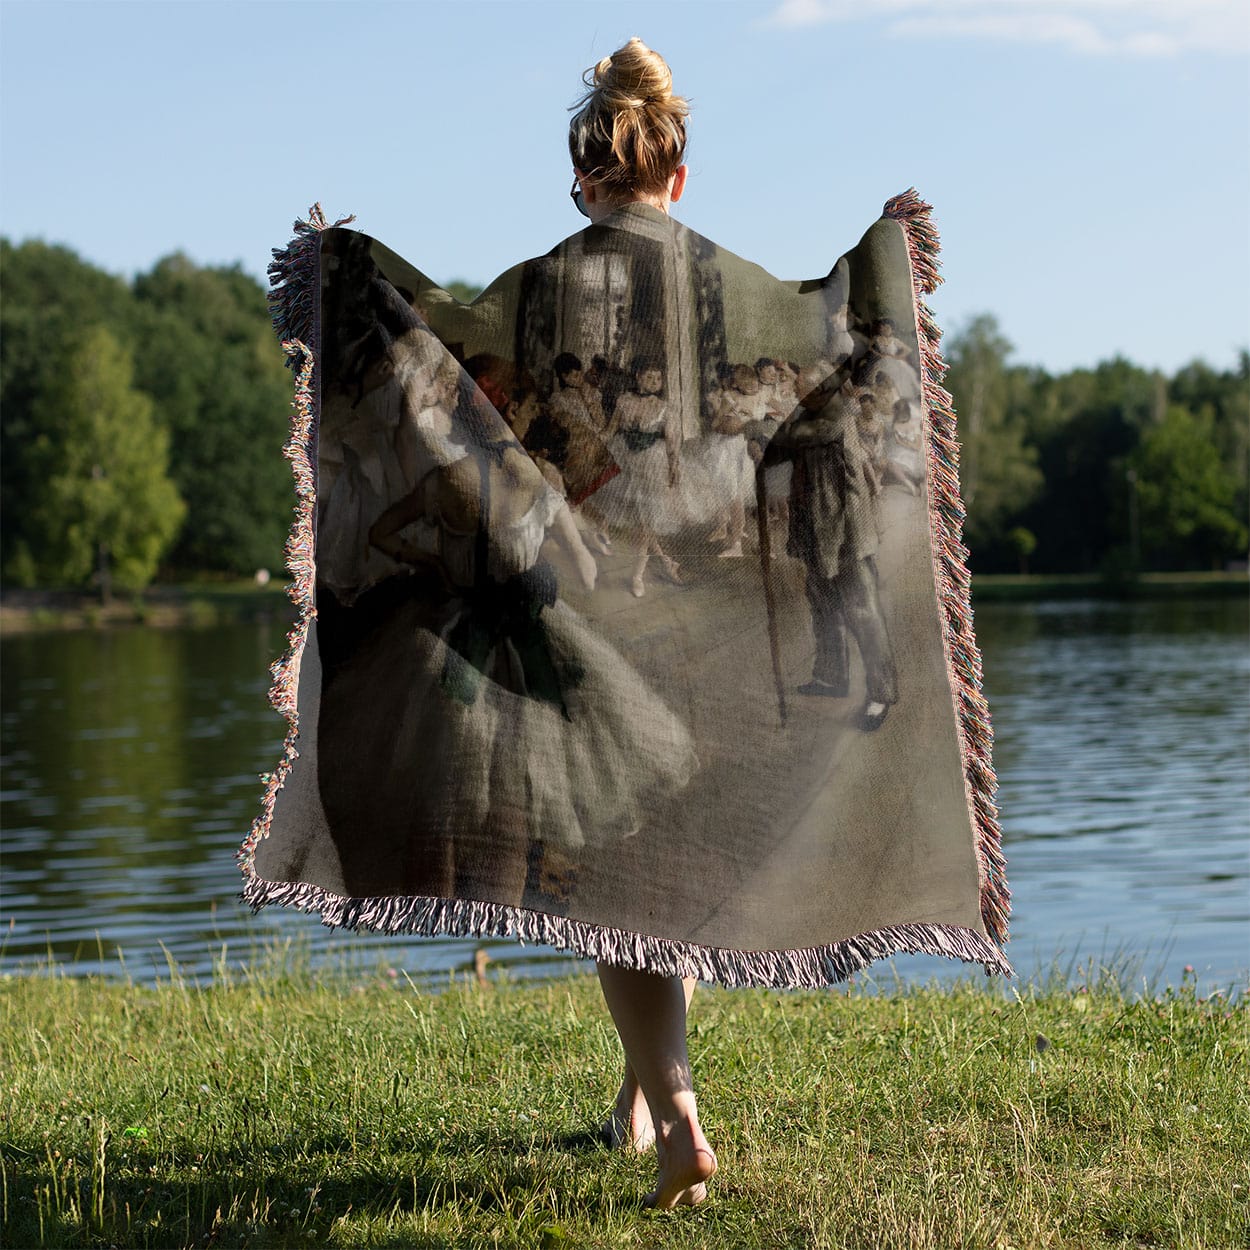 Ballerina Woven Blanket Held on a Woman's Back Outside